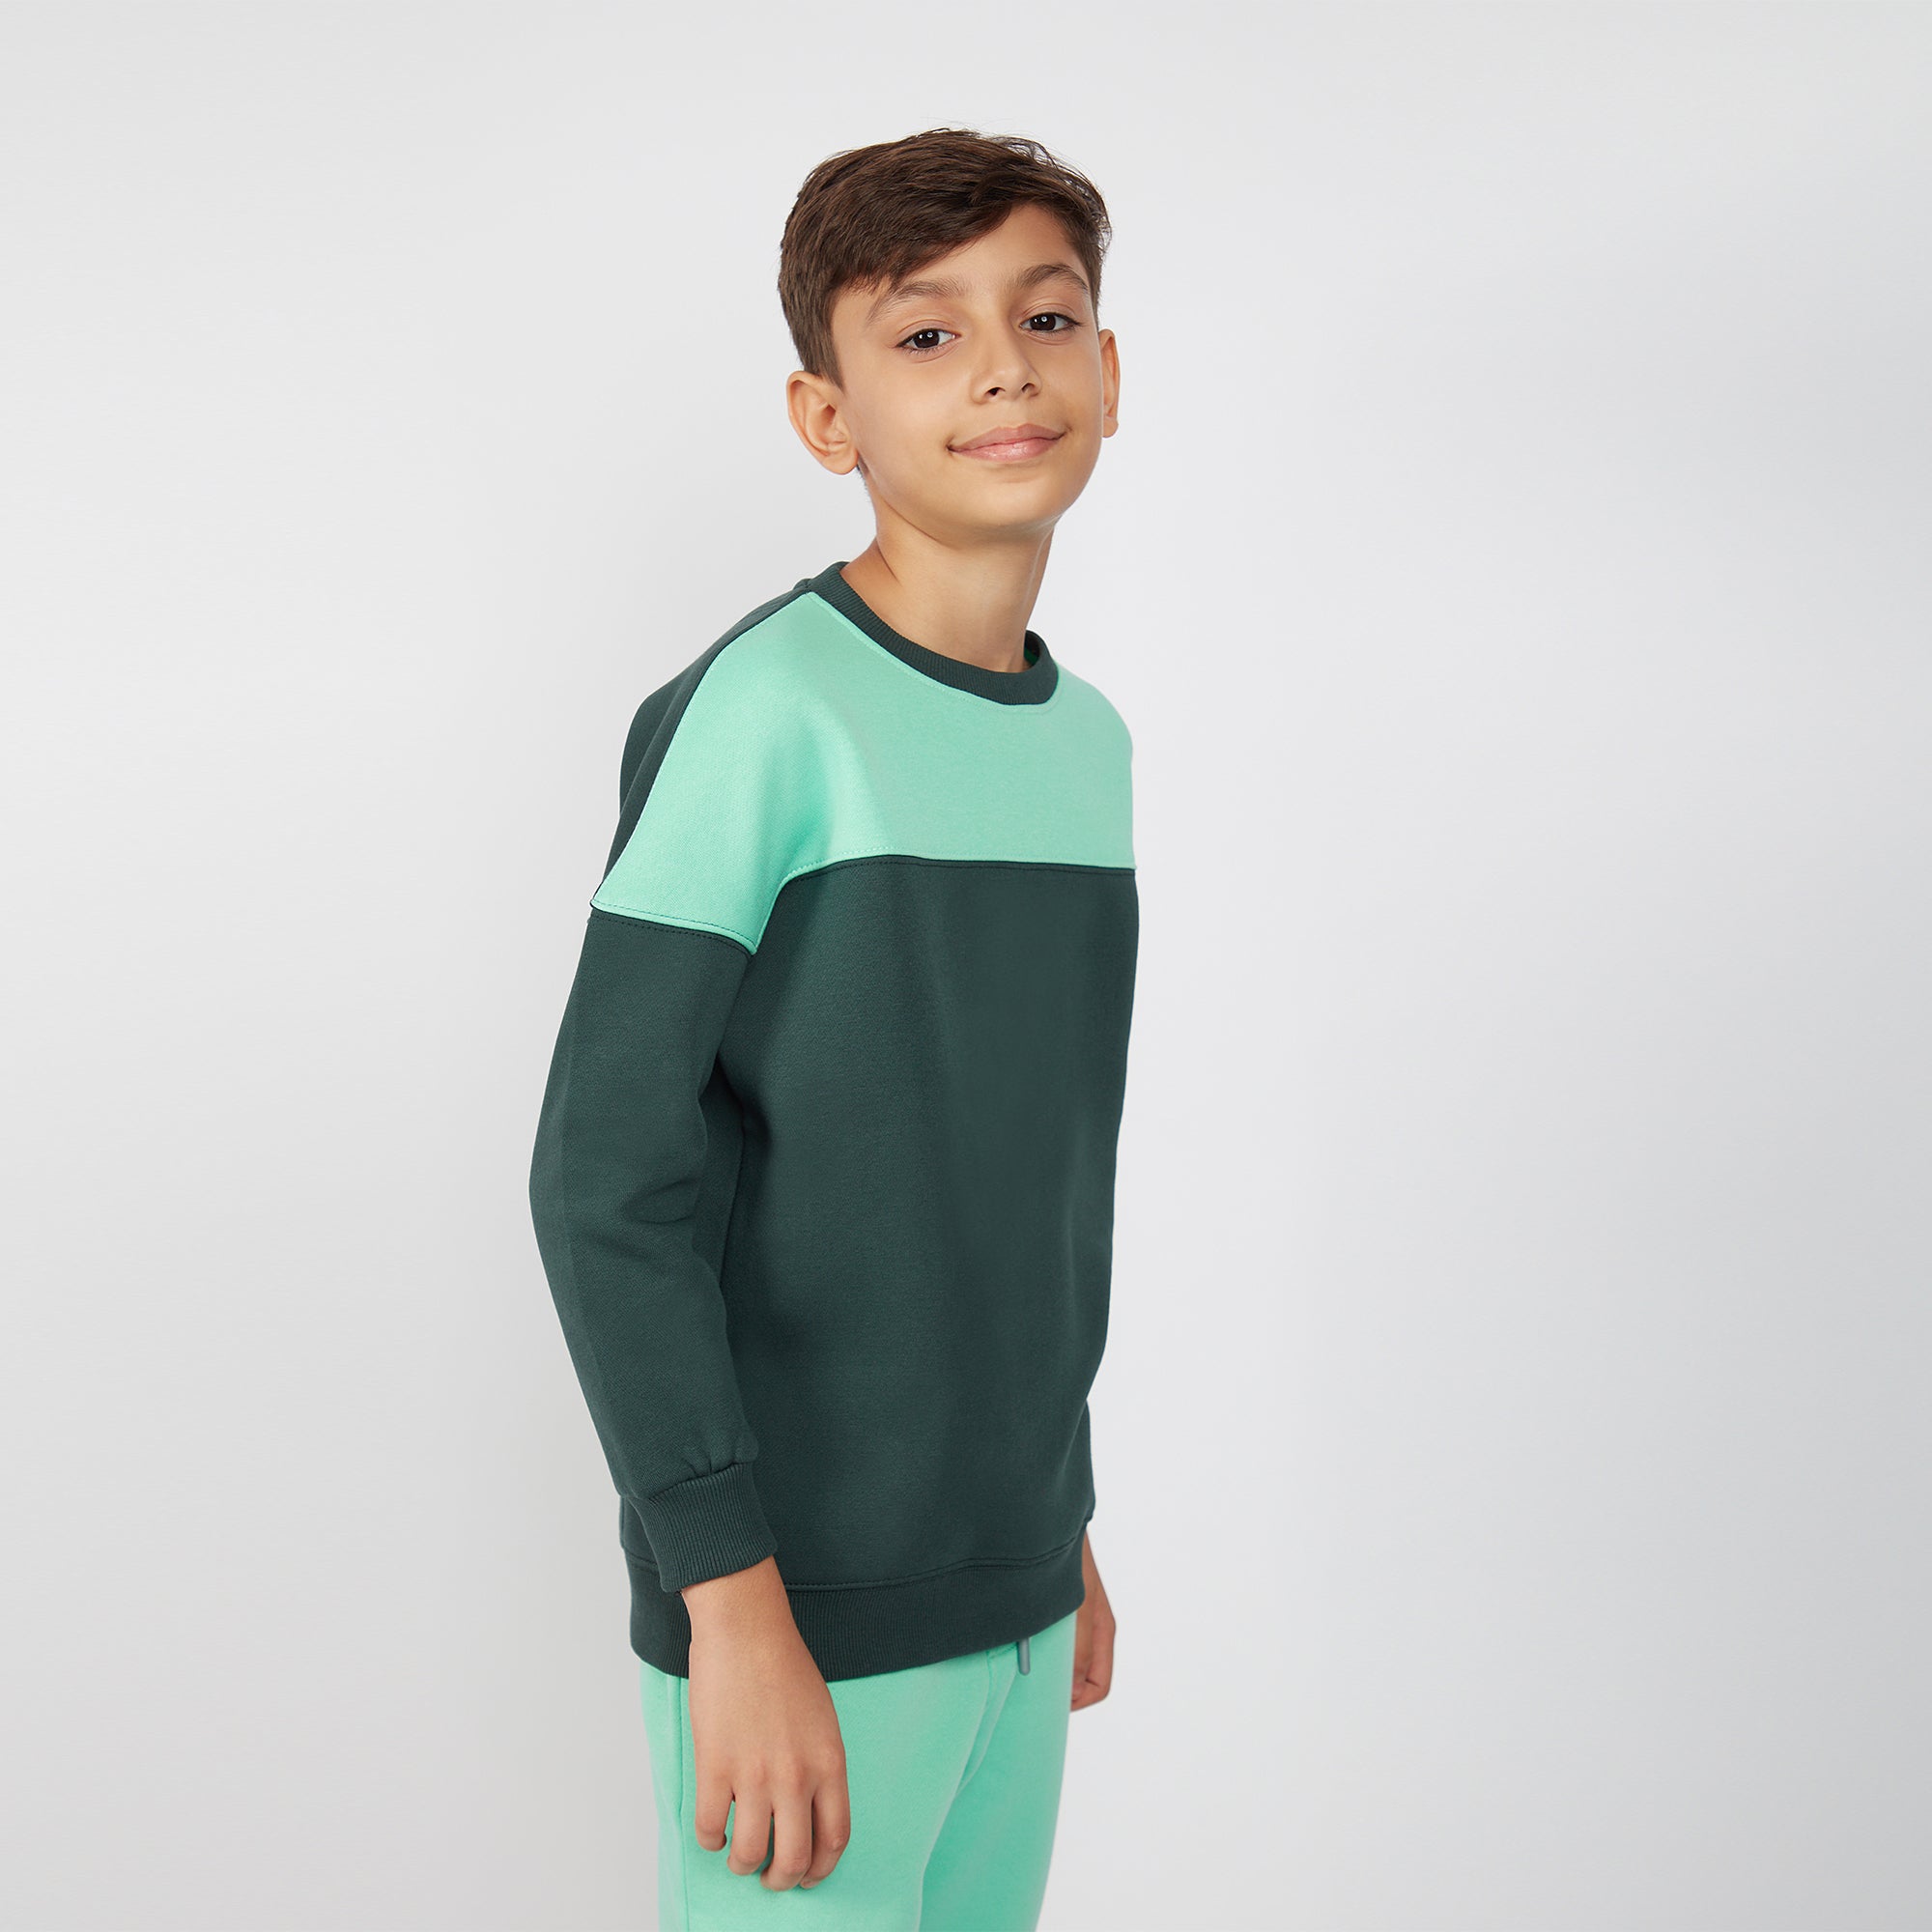 Bombay High Boy's Jungle Green Color Block Knit Sweatshirt